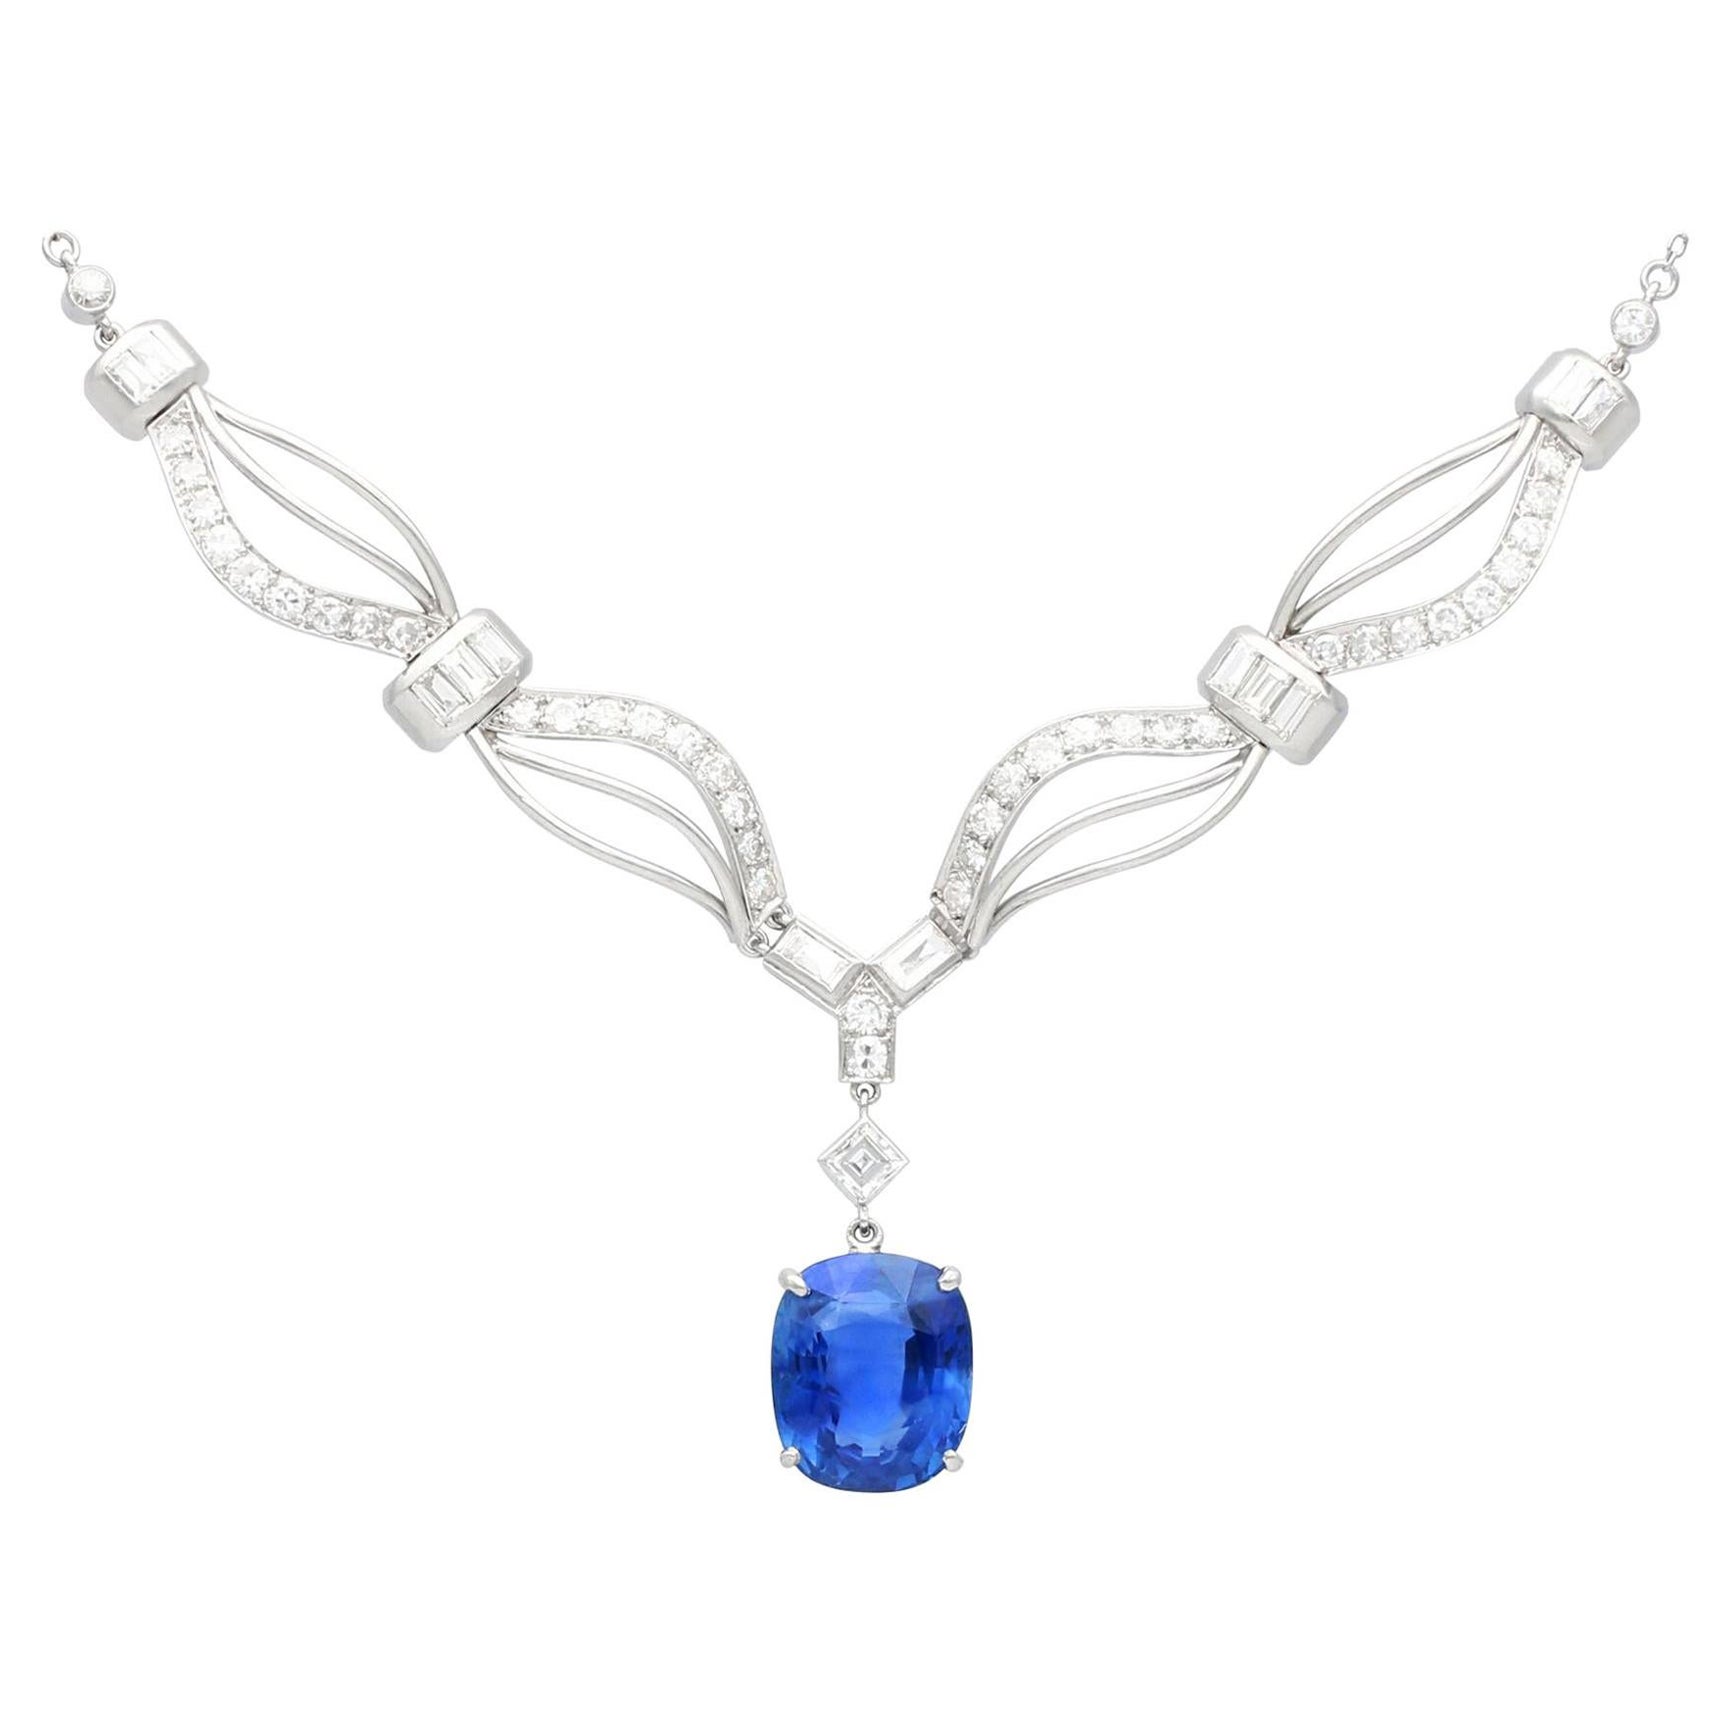 A classical Vintage sapphire diamond necklace